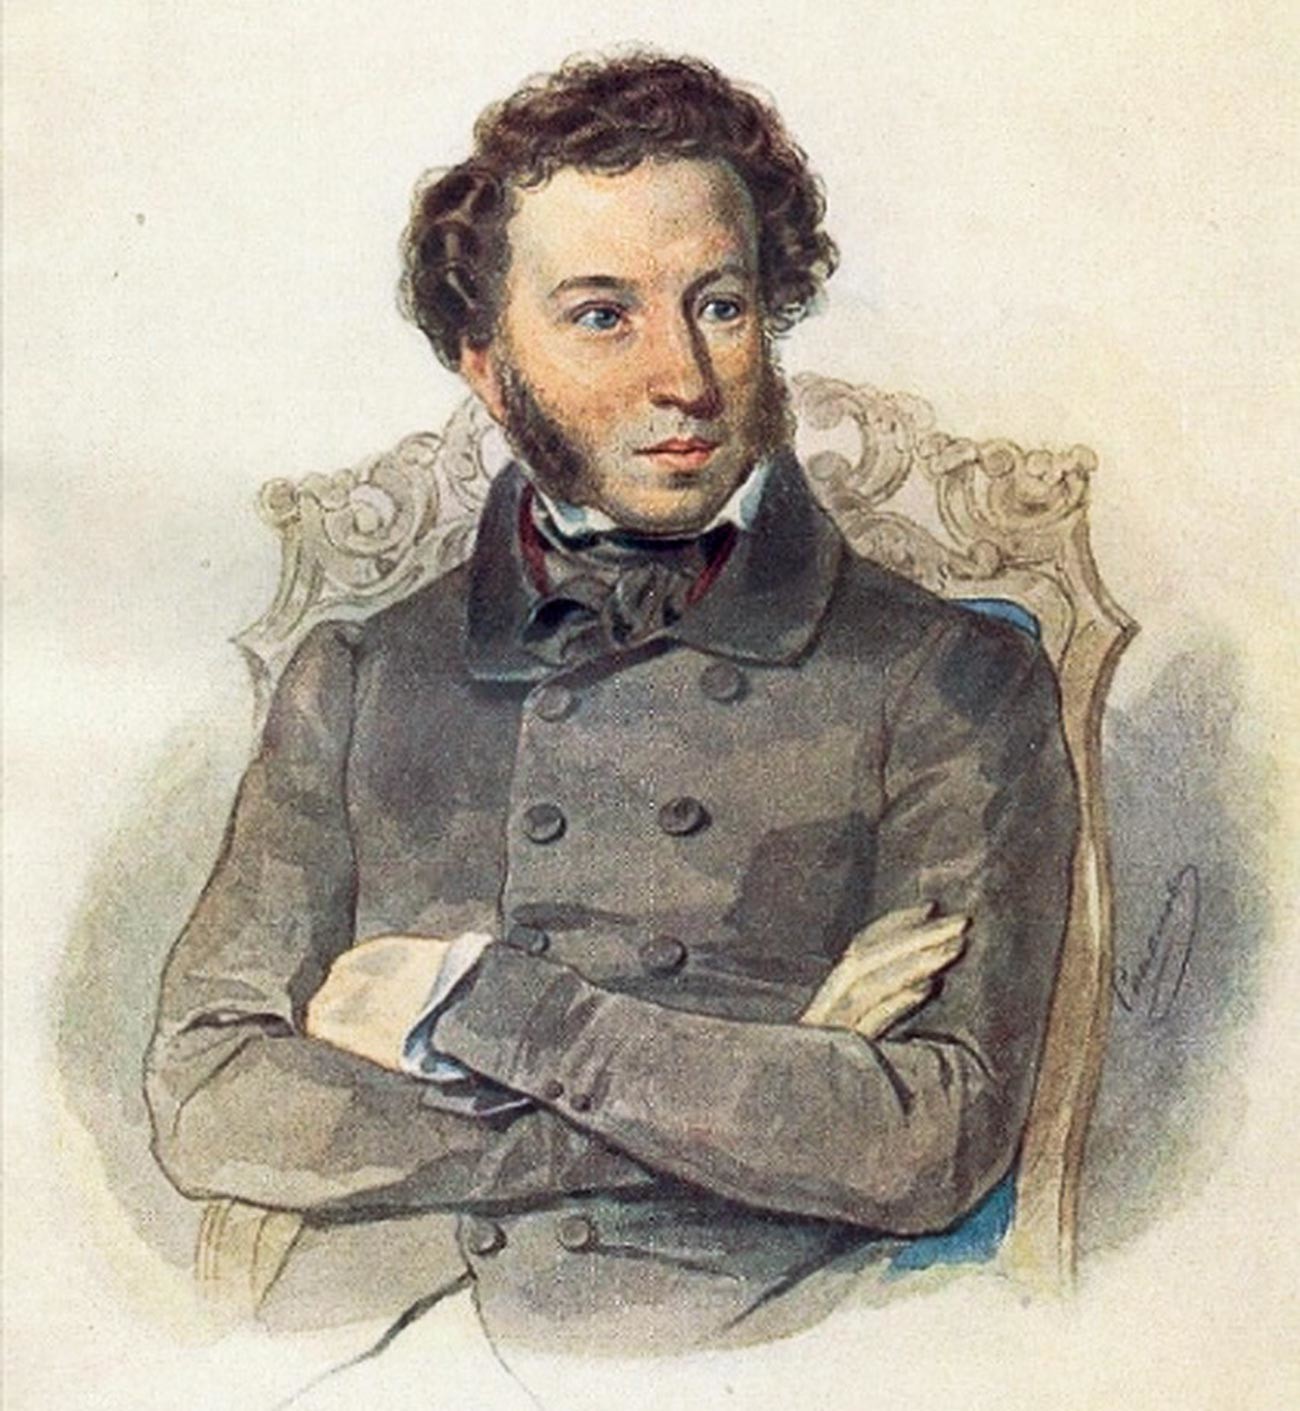 Portrait of Alexander Pushkin, by Pyotr Sokolov, 1836.